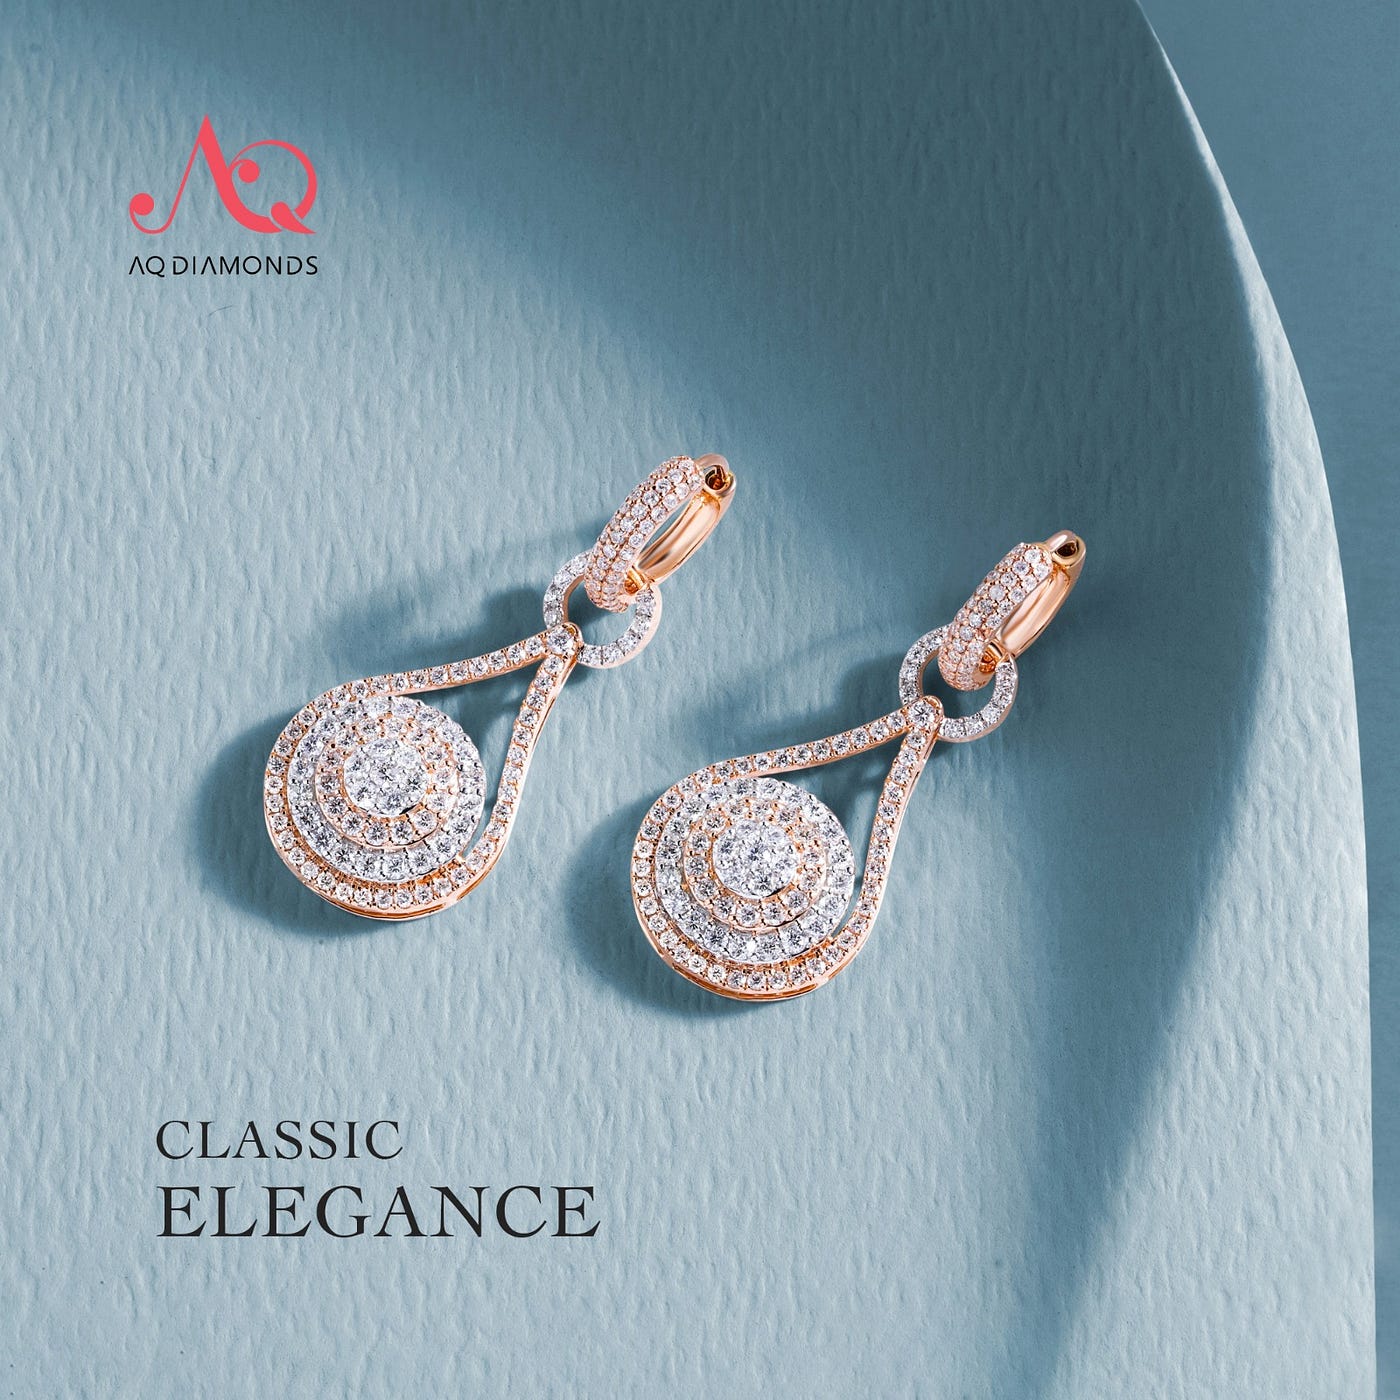 AQDiamonds — Best 18 ct Diamond Earrings in Dubai - Aqdiamonds - Medium